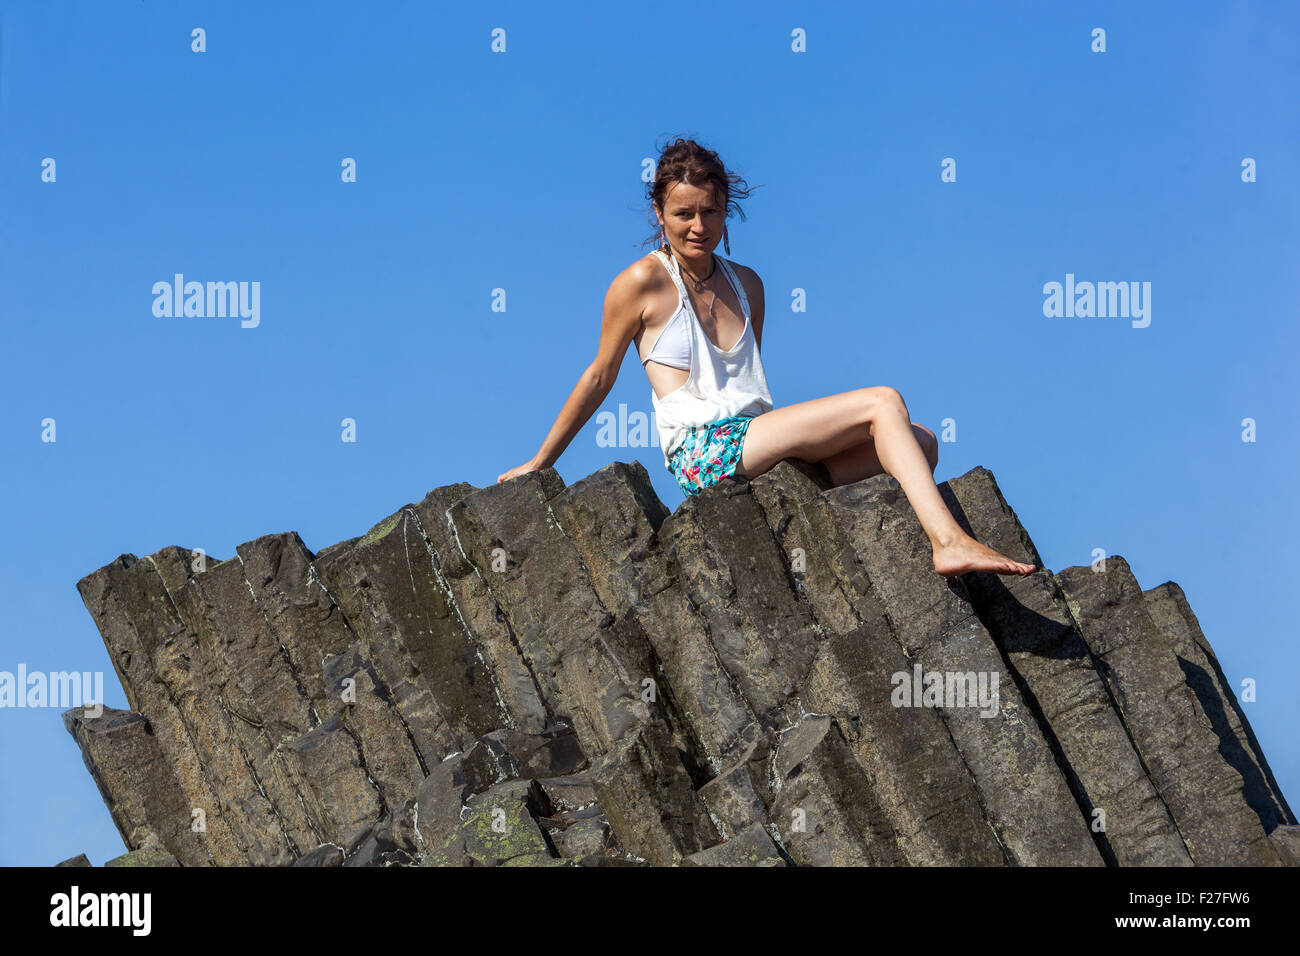 Woman on volcanic rock, Panska Skala, Kamenicky Senov, Northern Bohemia, Czech Republic, Europe Stock Photo